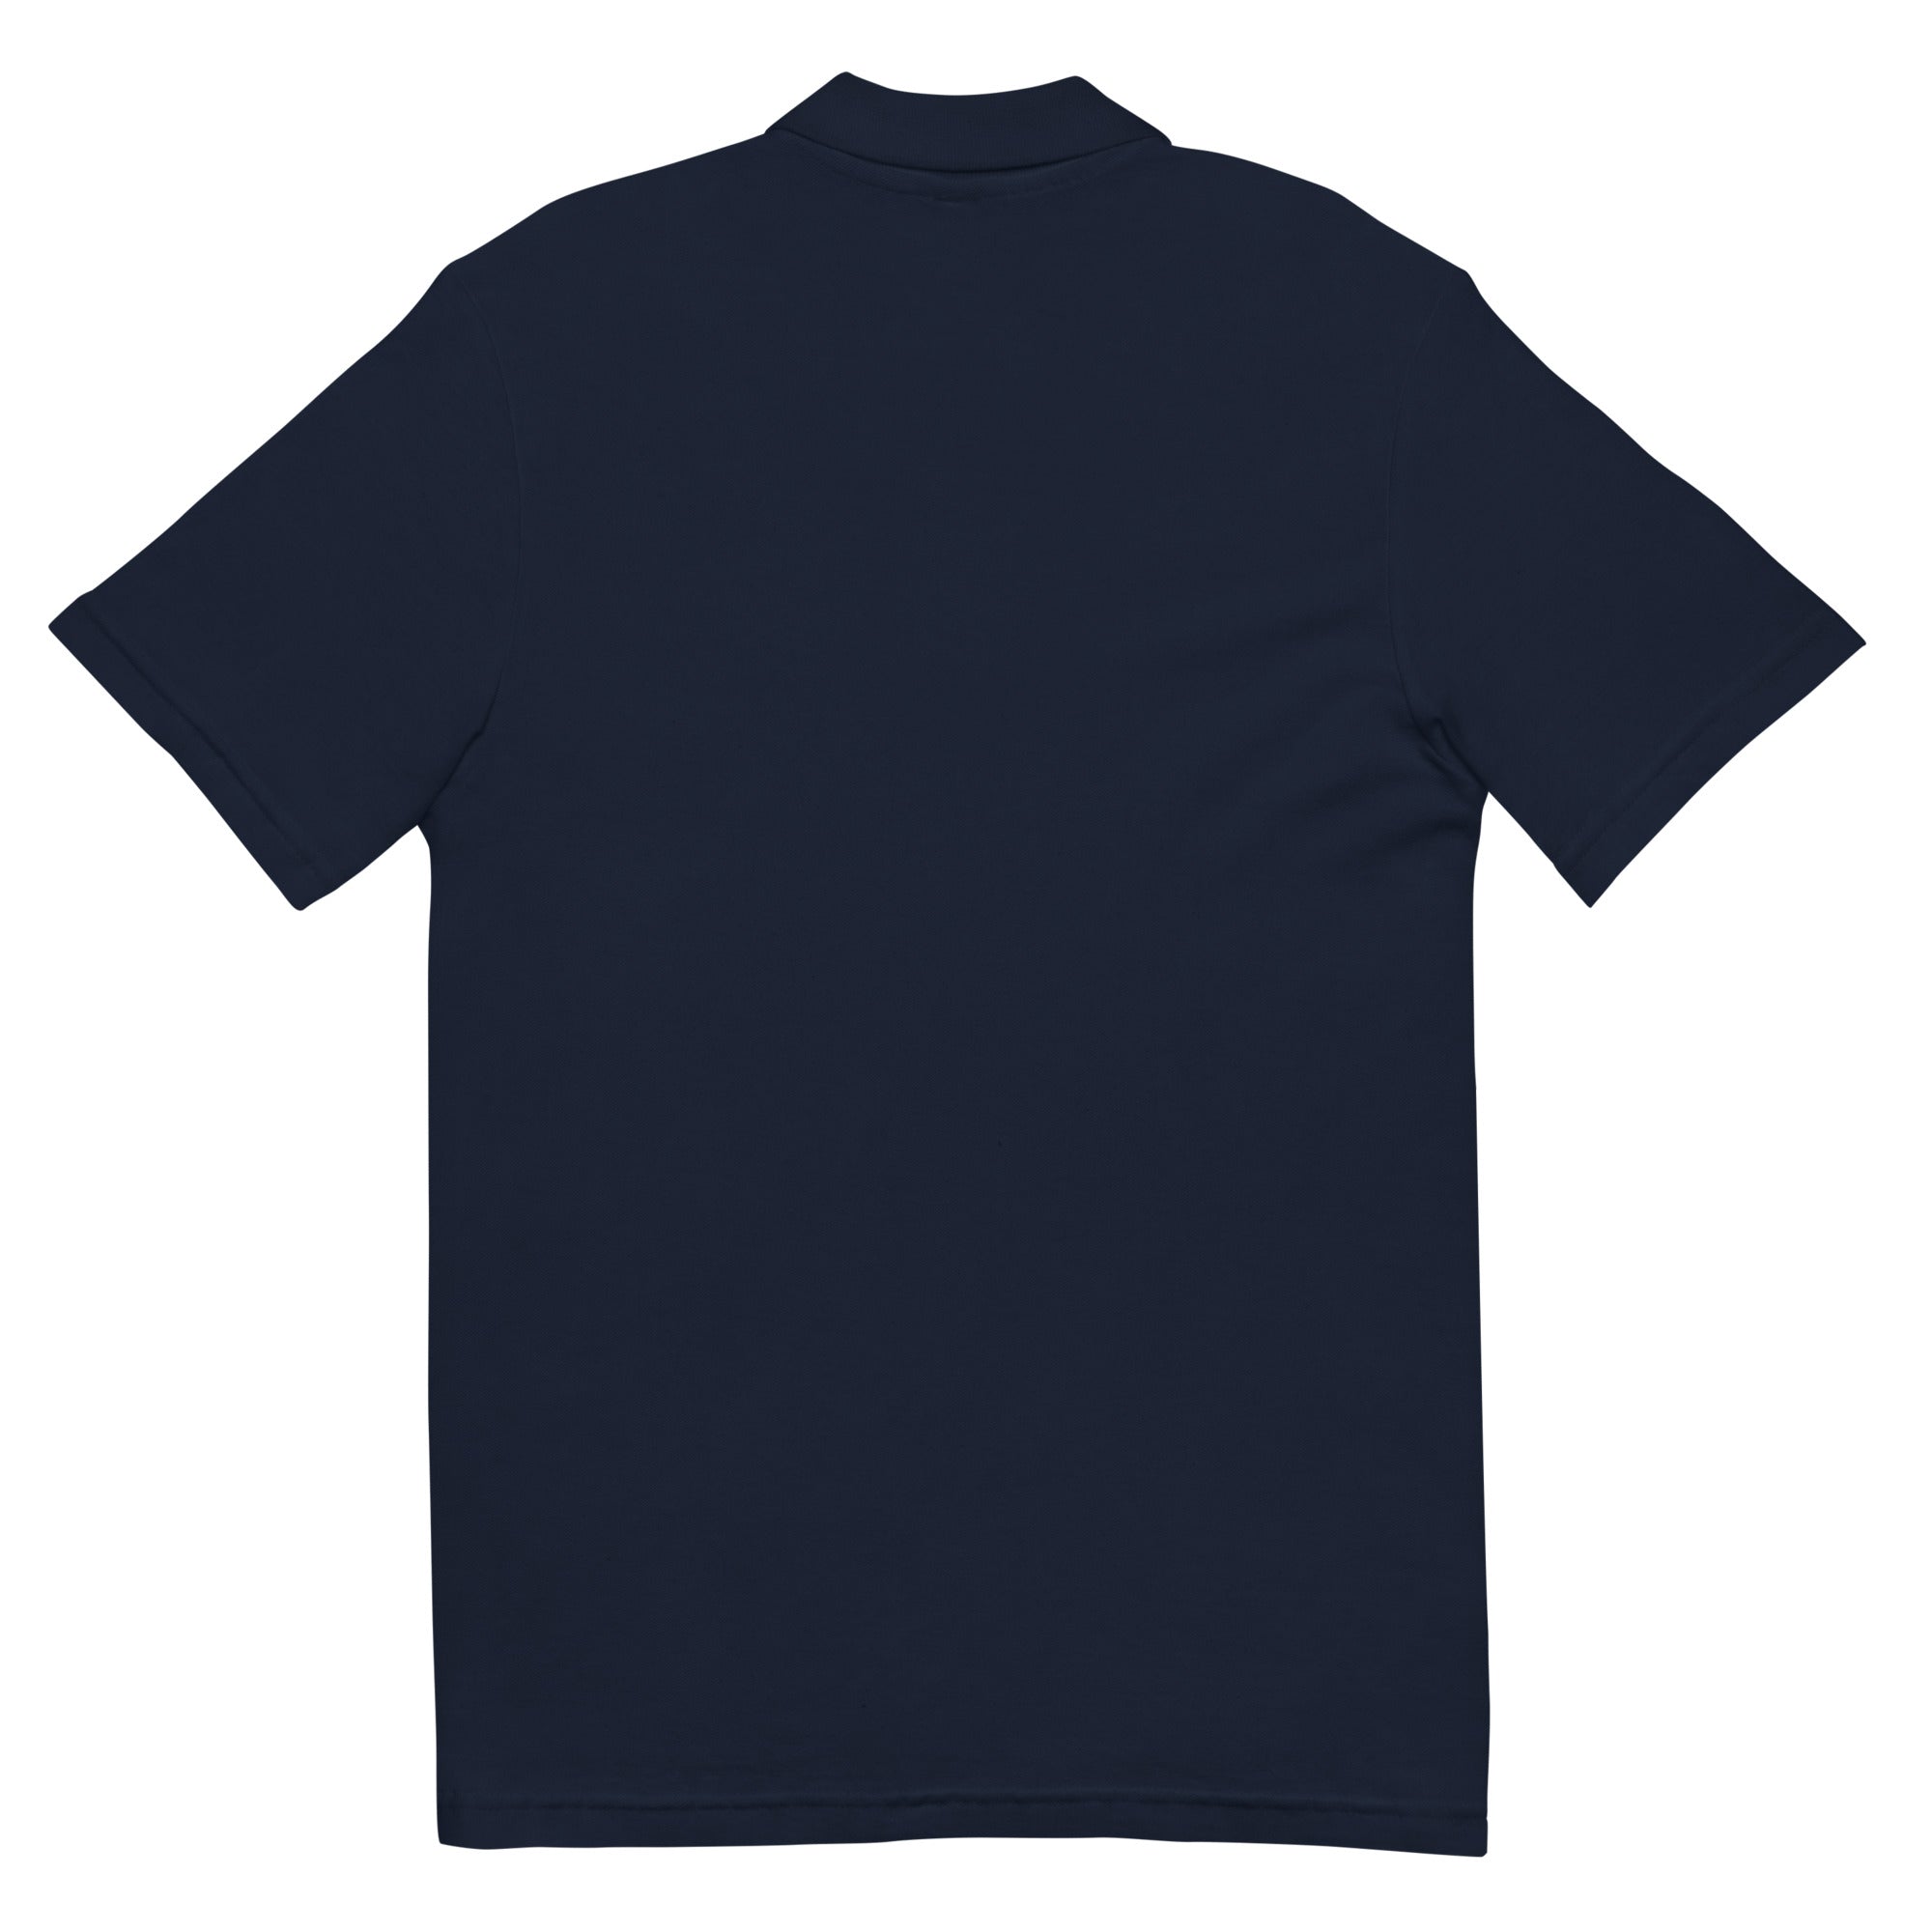 Independent Bison Liberty Maniacs Logo Pique Polo Shirt